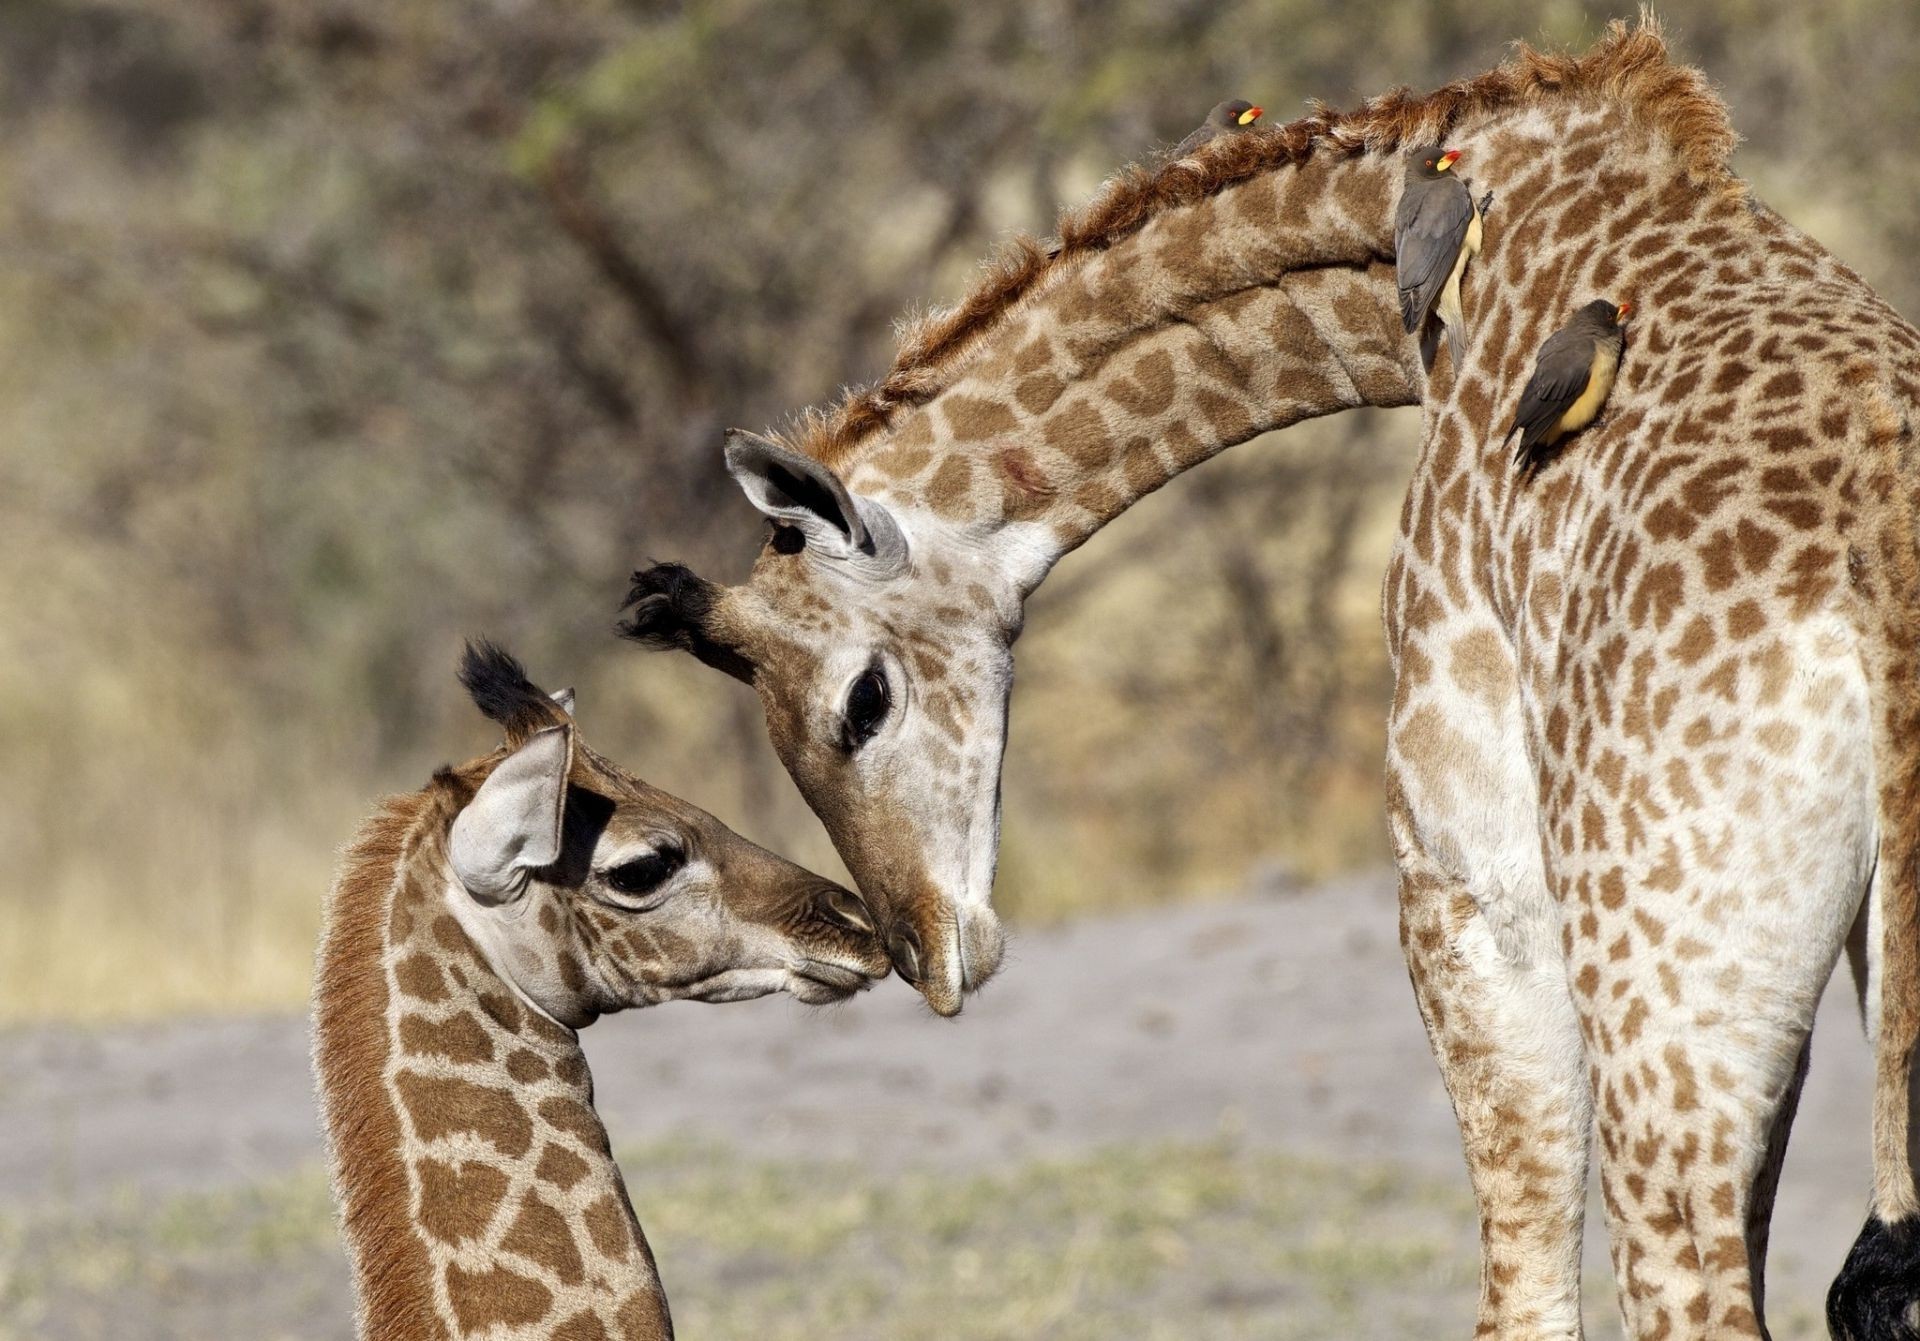 giraffes wildlife nature mammal giraffe wild animal safari park grass neck portrait outdoors savanna